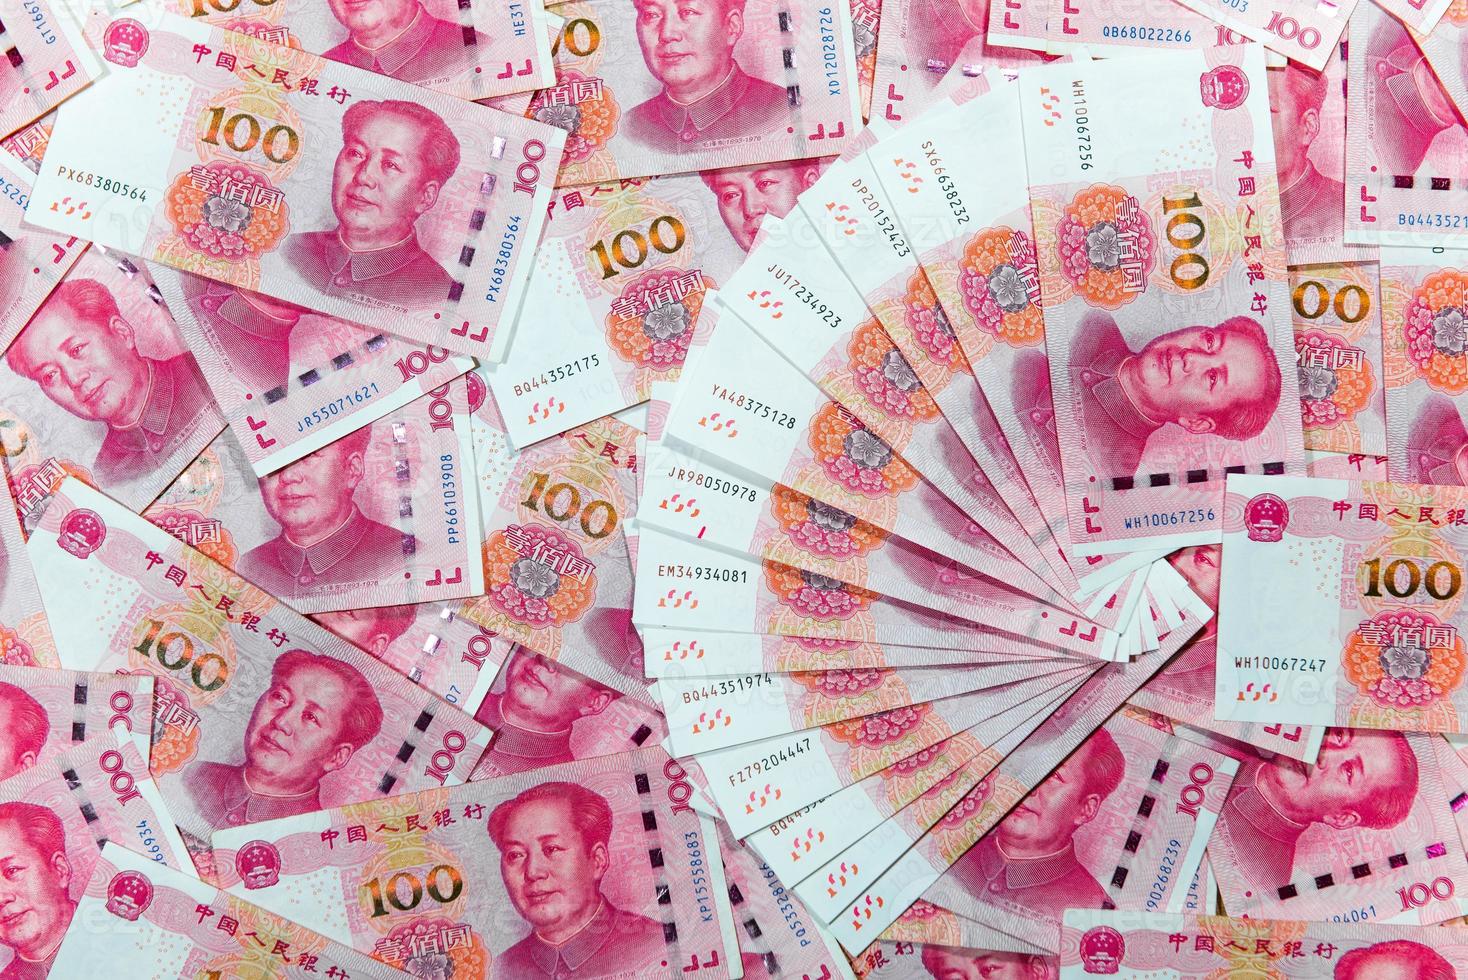 yuan eller rmb, kinesisk valuta foto